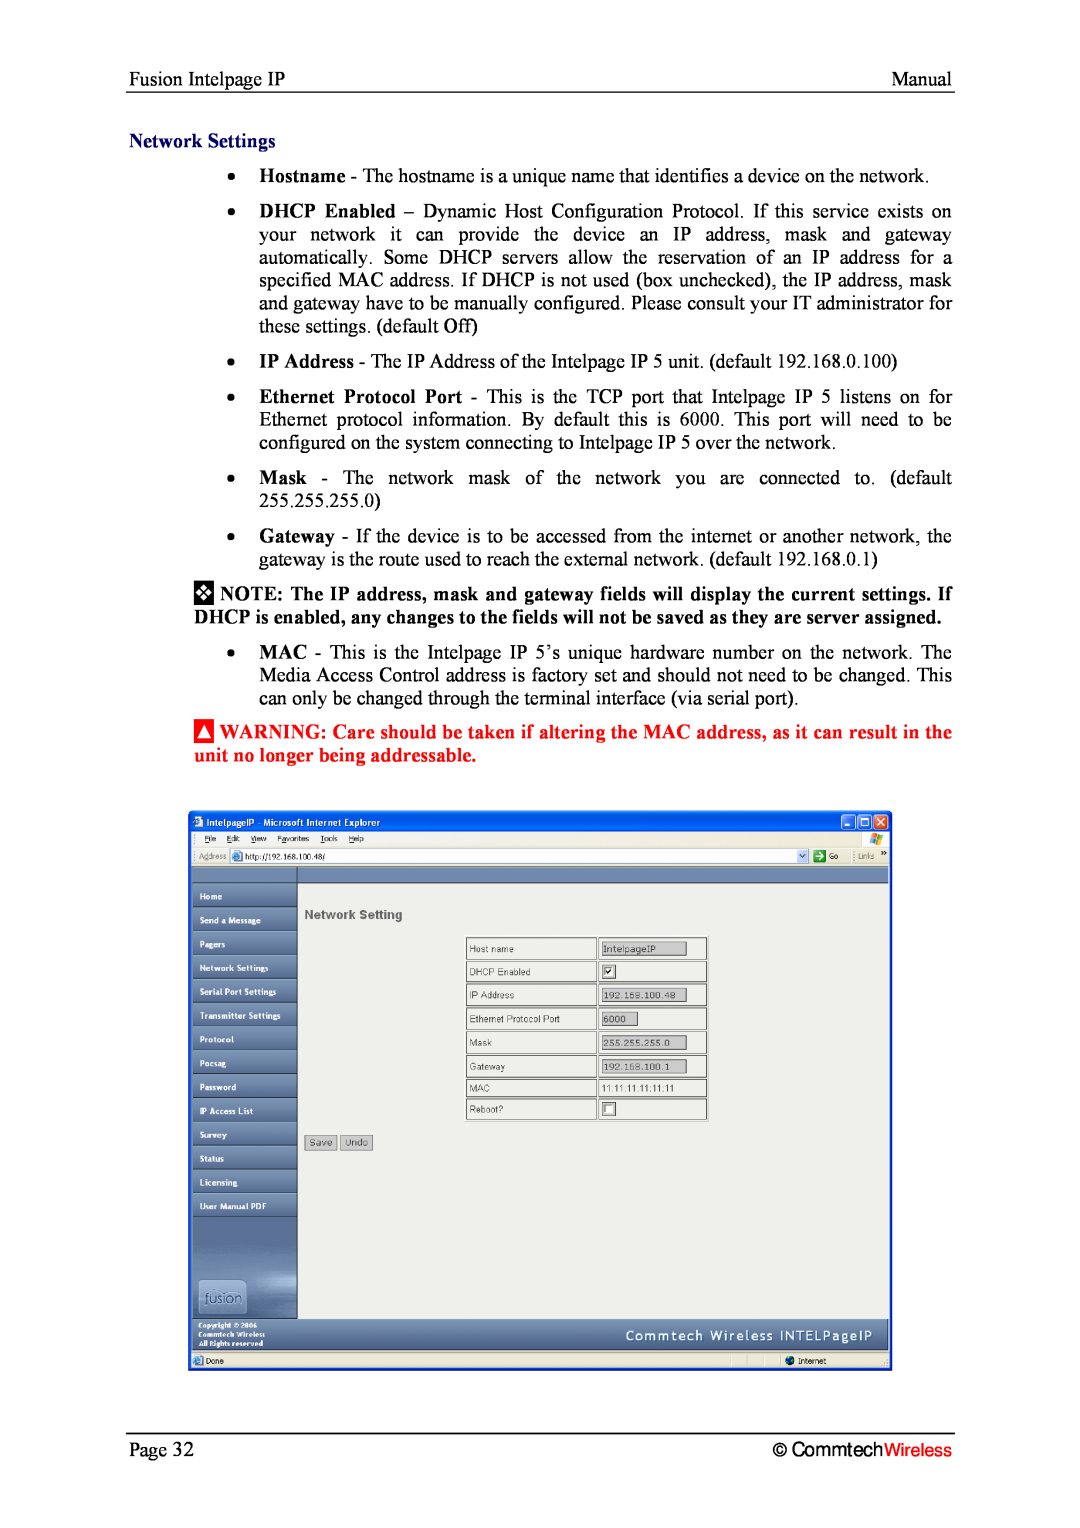 Fusion 2.1, INTELPage IP 5 manual Fusion Intelpage IP, Network Settings, CommtechWireless 